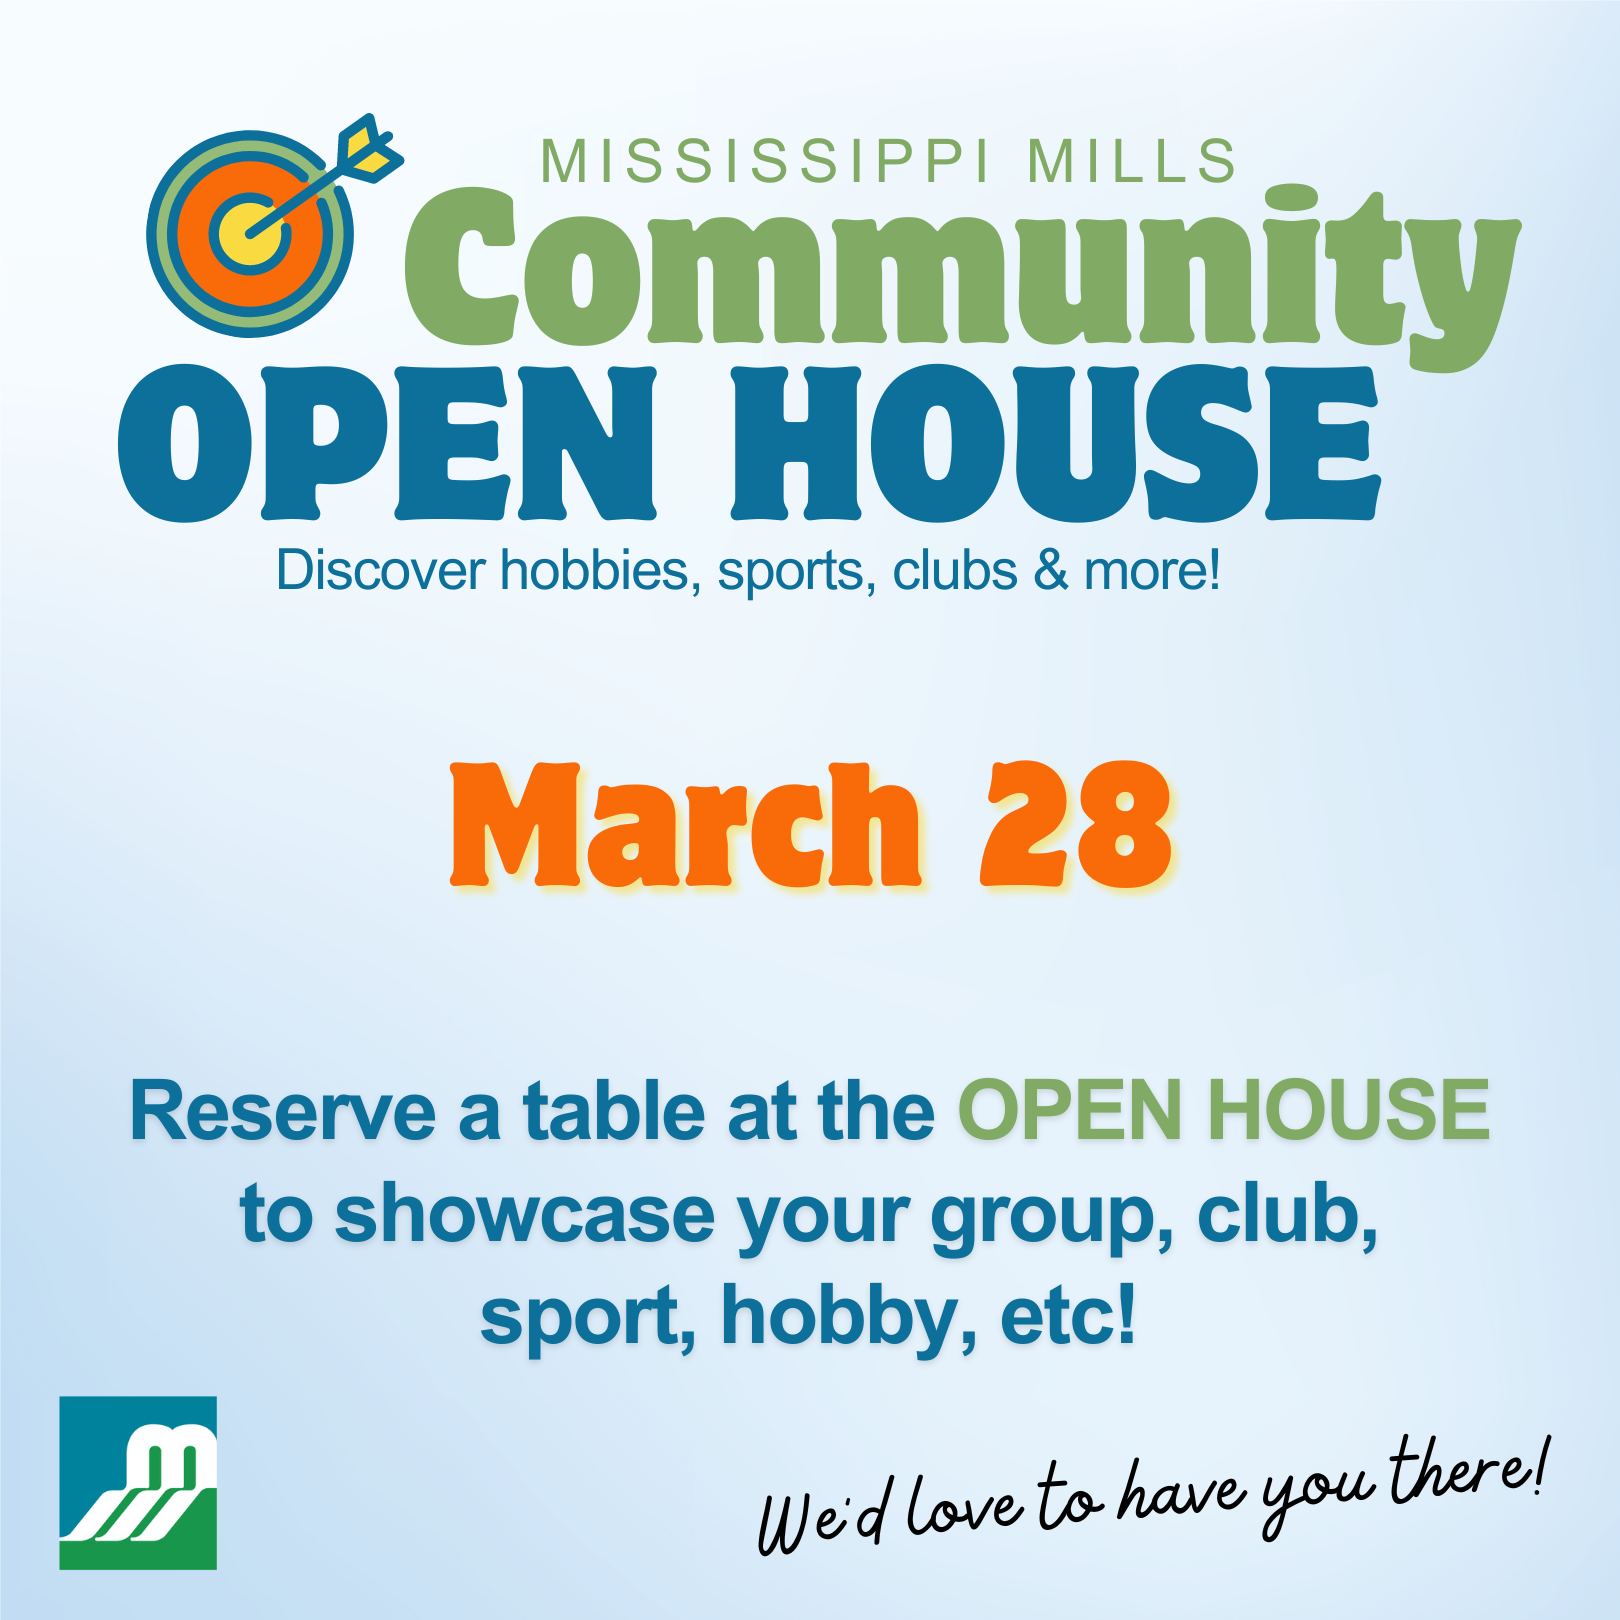 Poster advertising Mississippi Mills Community Open House